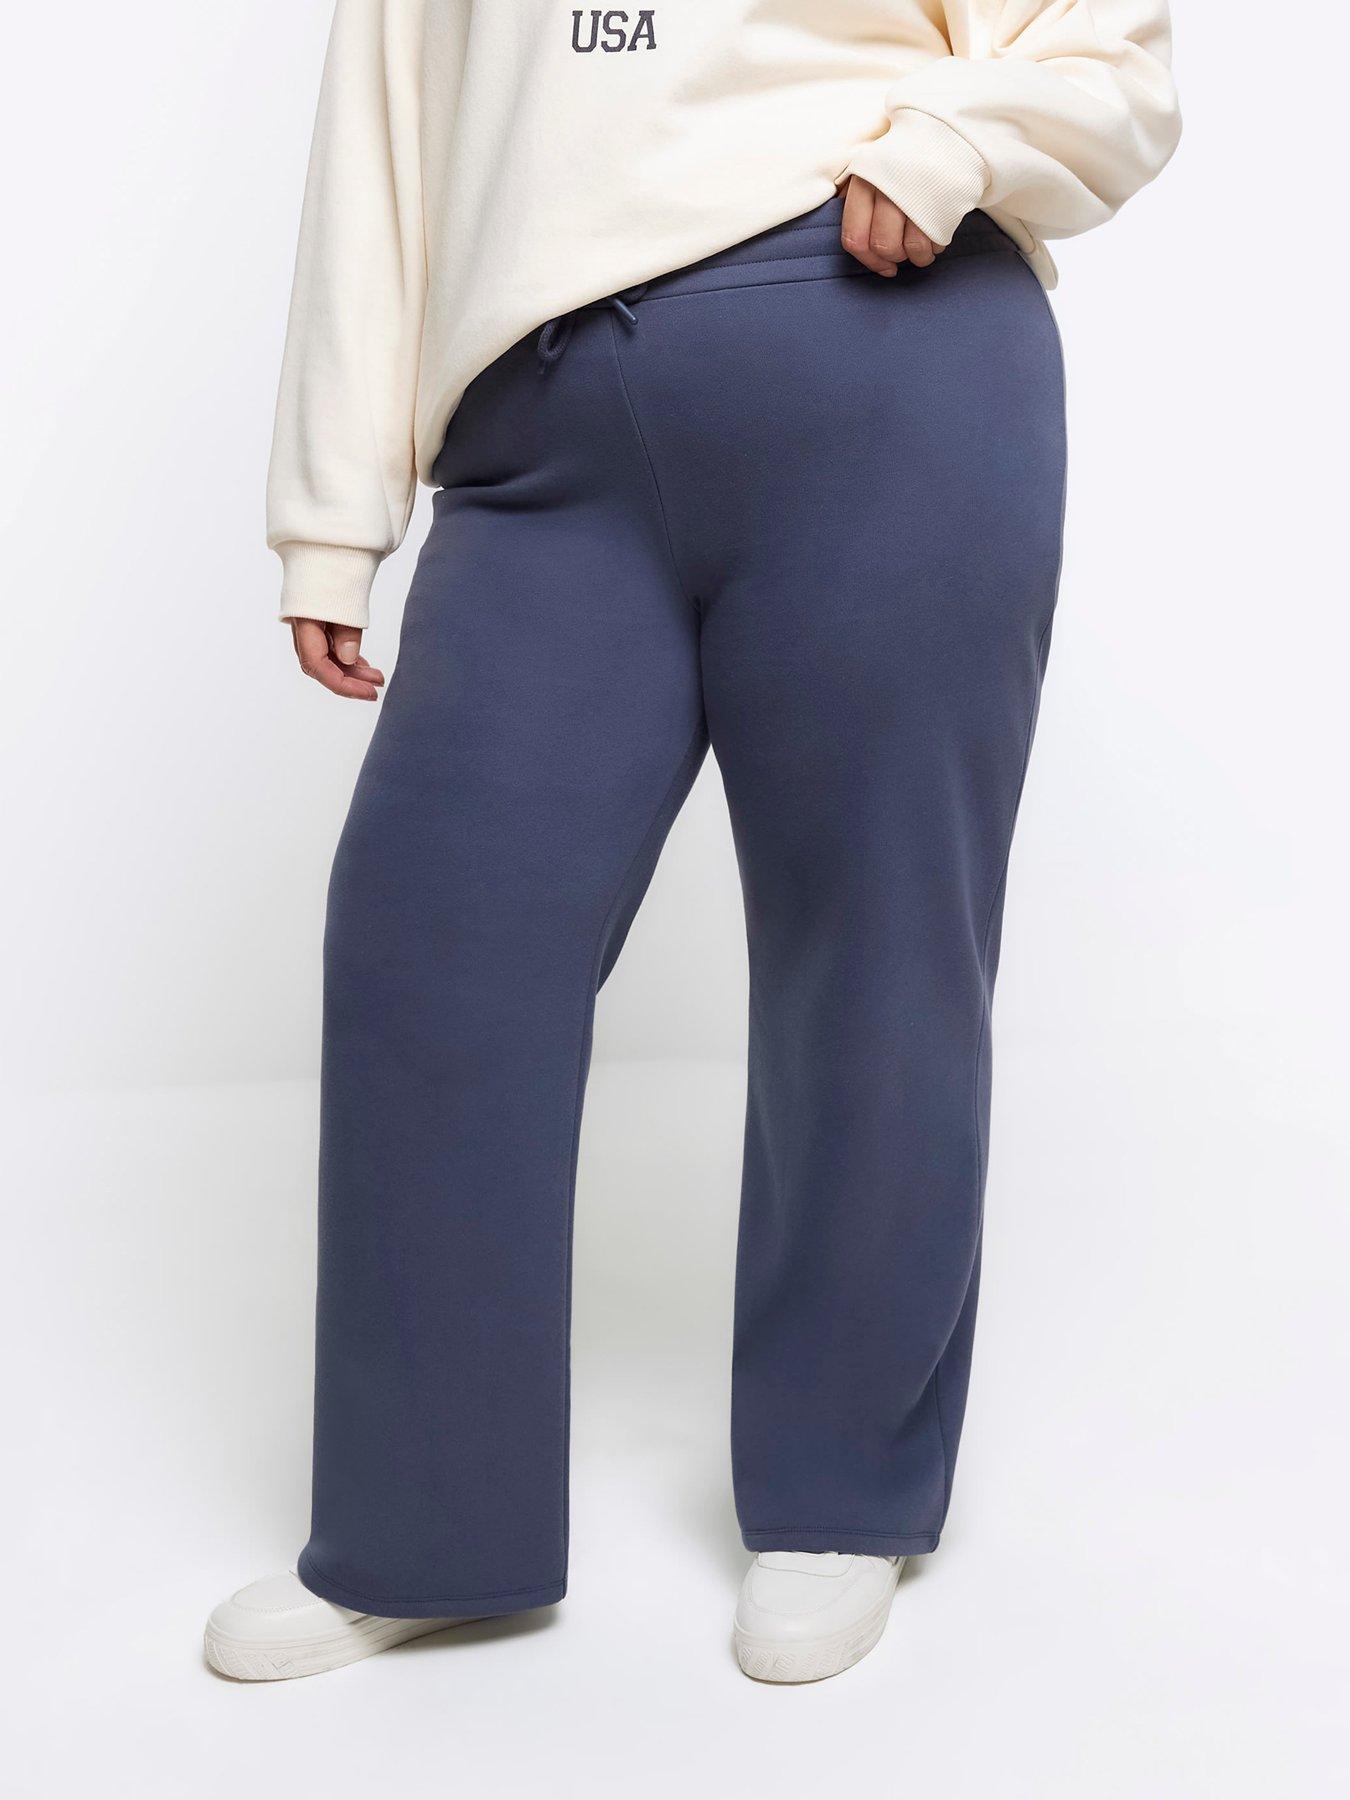 Womens medium (8-10) navy blue Nike wide leg track pants split hem